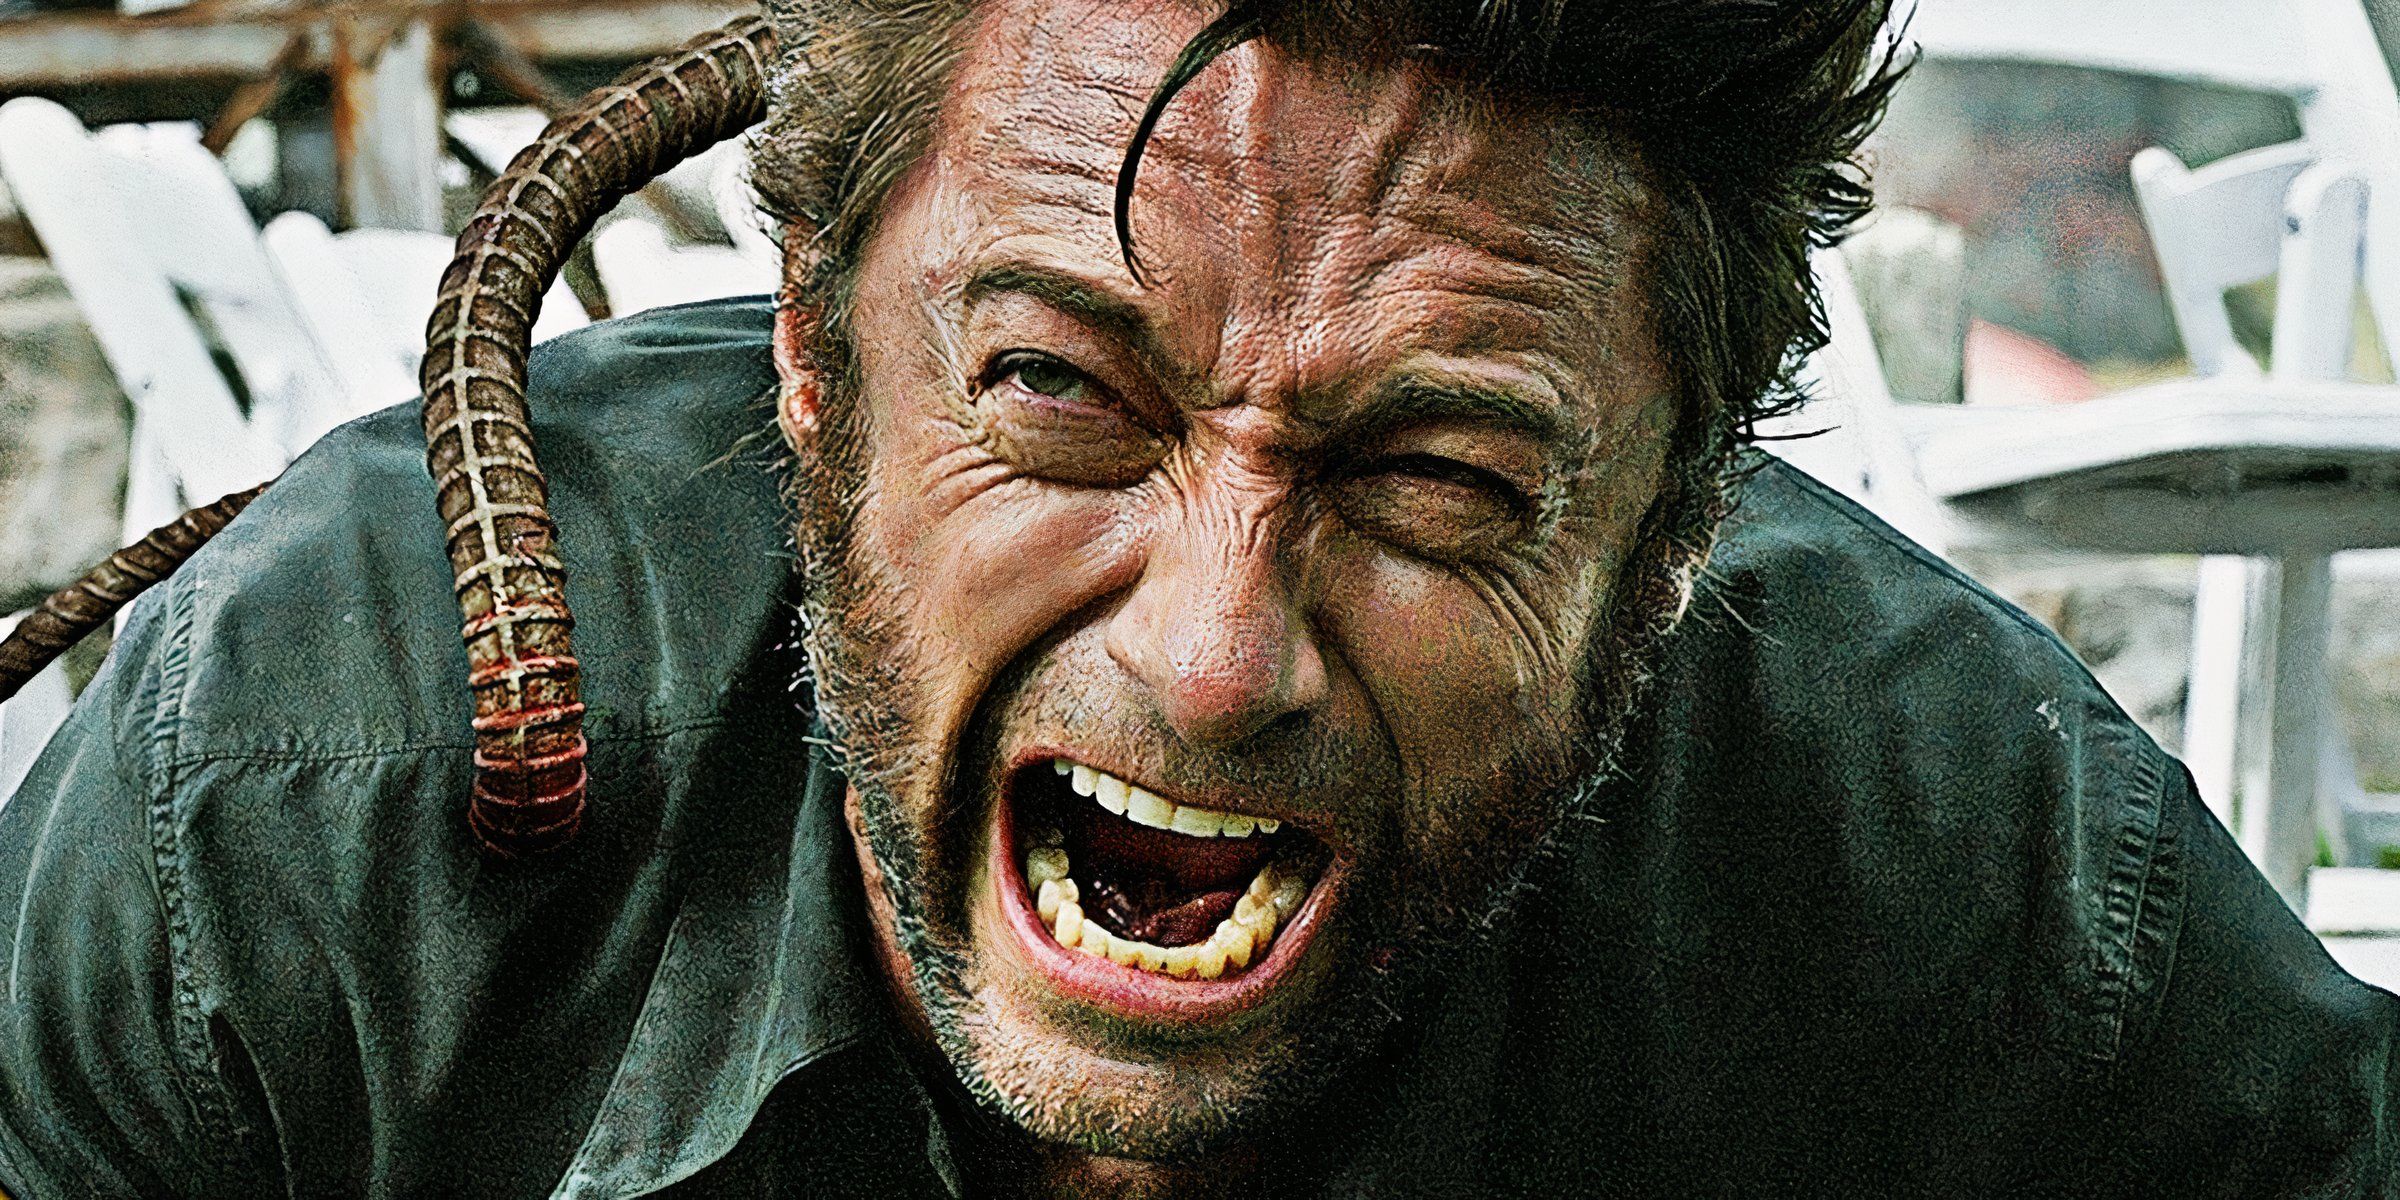 Hugh Jackman's Wolverine screams in pain in X-Men Days of Future Past